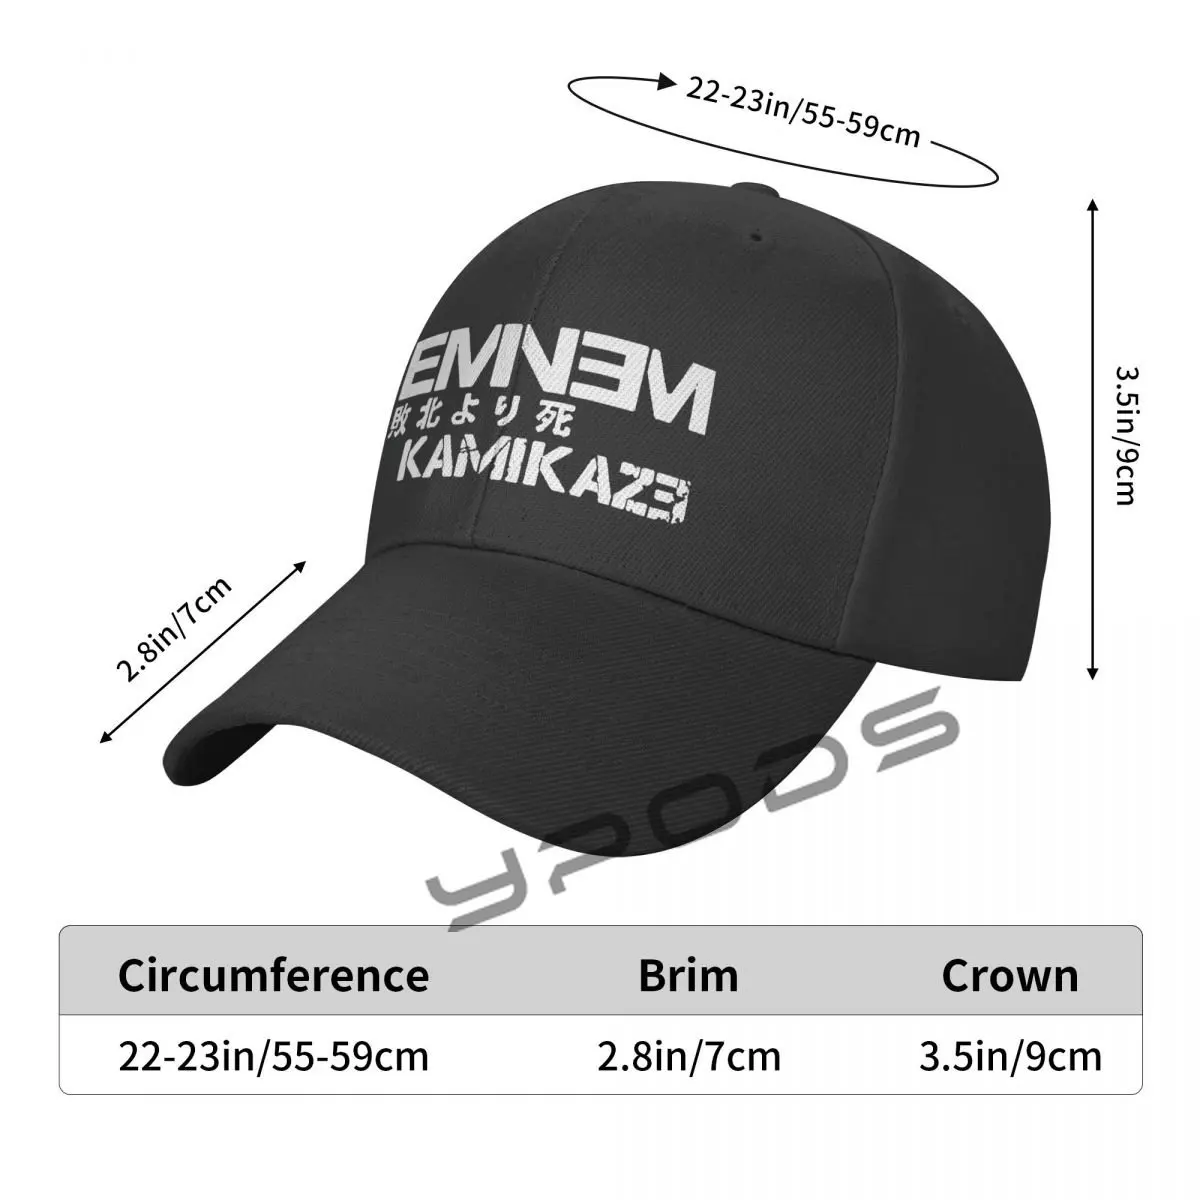 Eminem Kamikaze Casual Baseball Cap for Women and Men Fashion Hat Hard Top Caps Snapback Hat Unisex images - 6